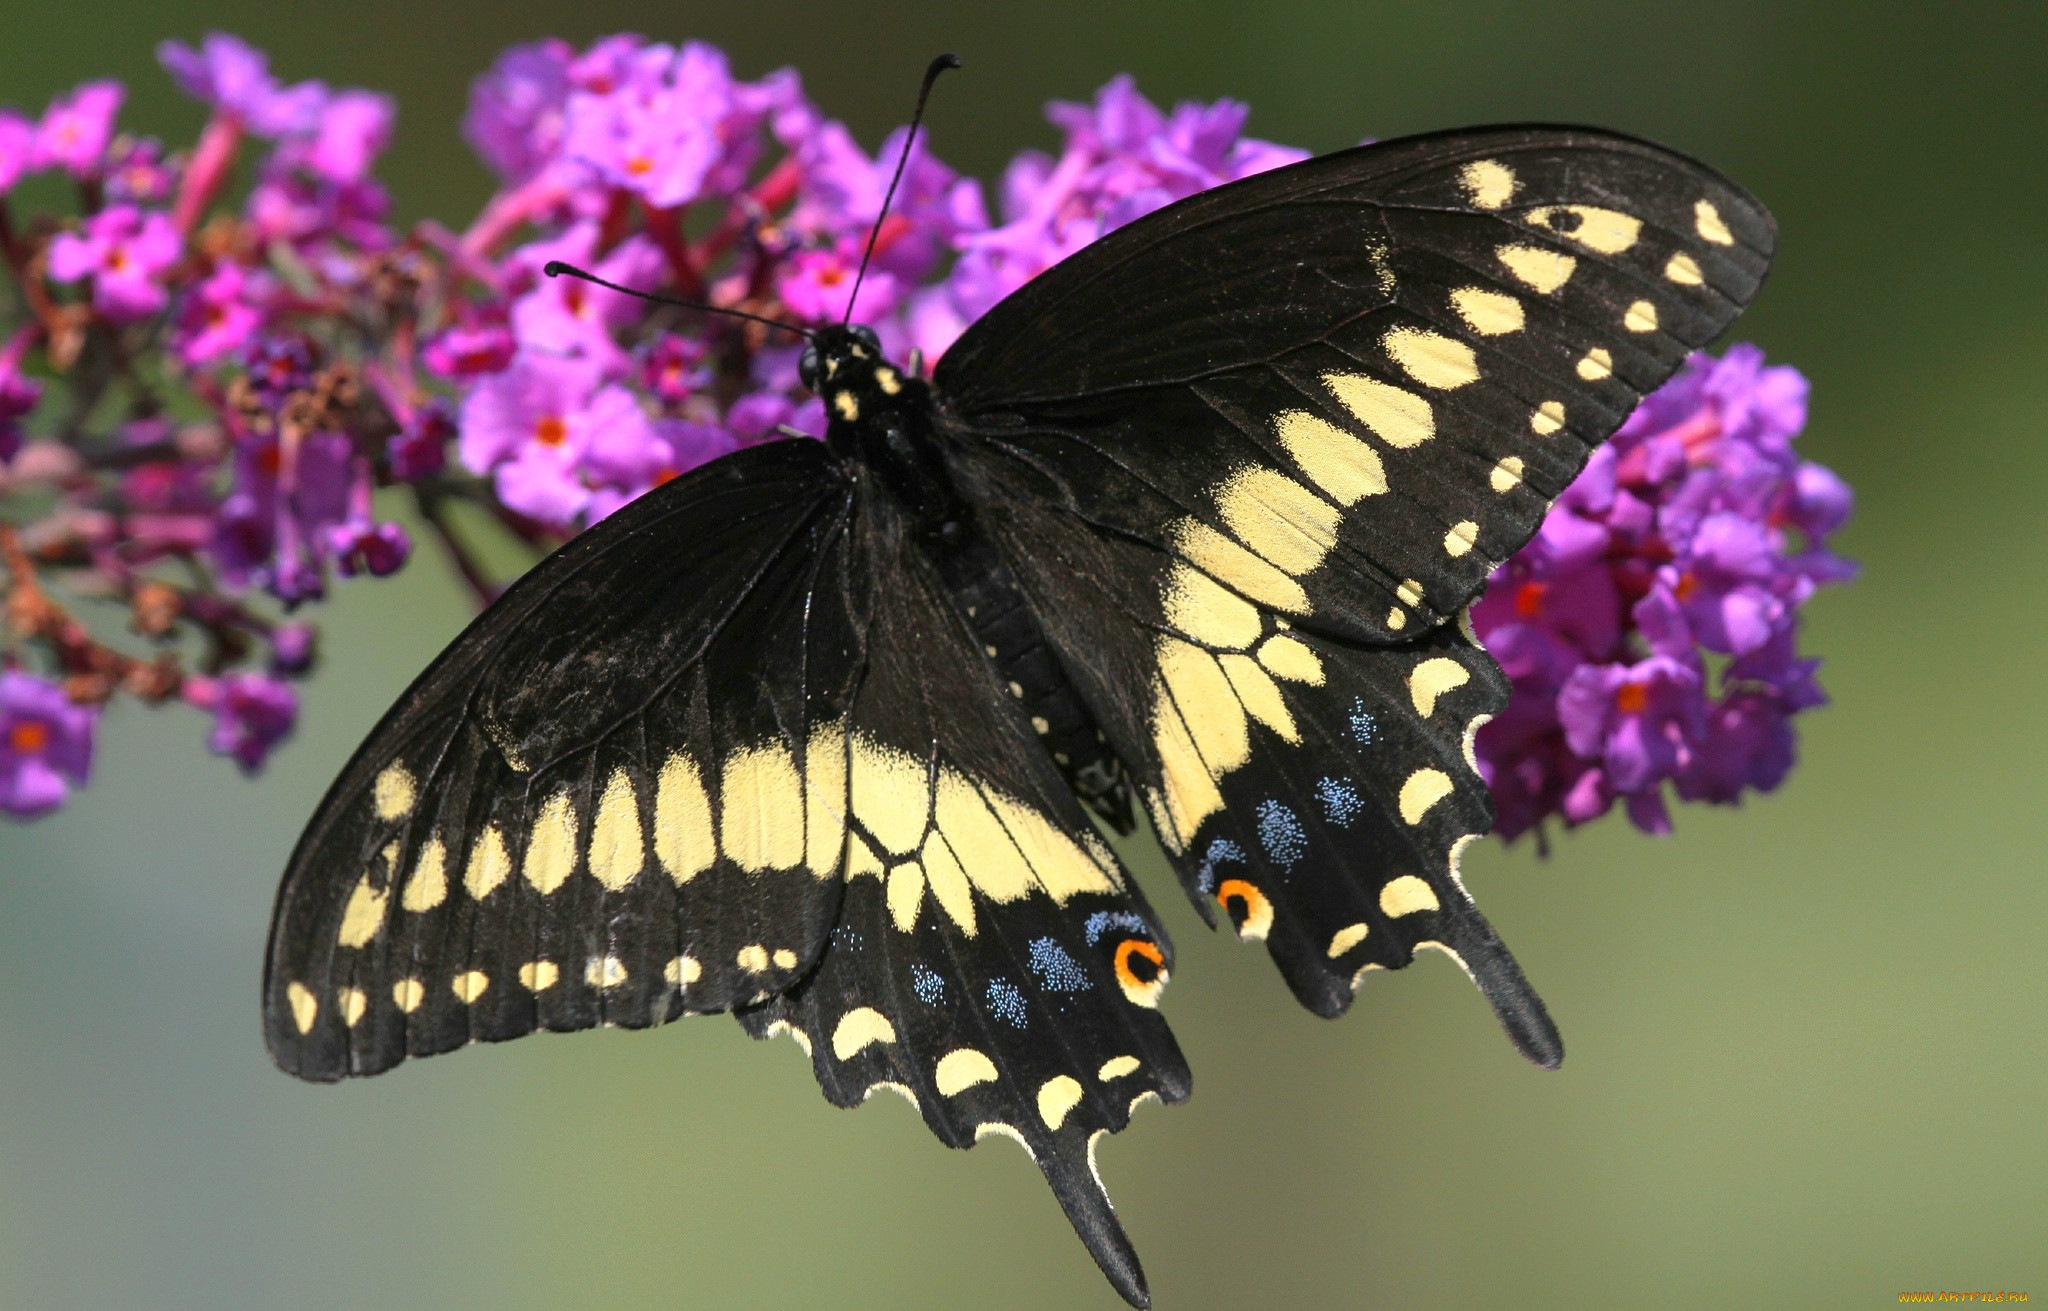 Цветы похожи на крылья бабочек. Пурпурная бабочка. Лунная бабочка. Пурпурный Император бабочка. Лунная моль бабочка.